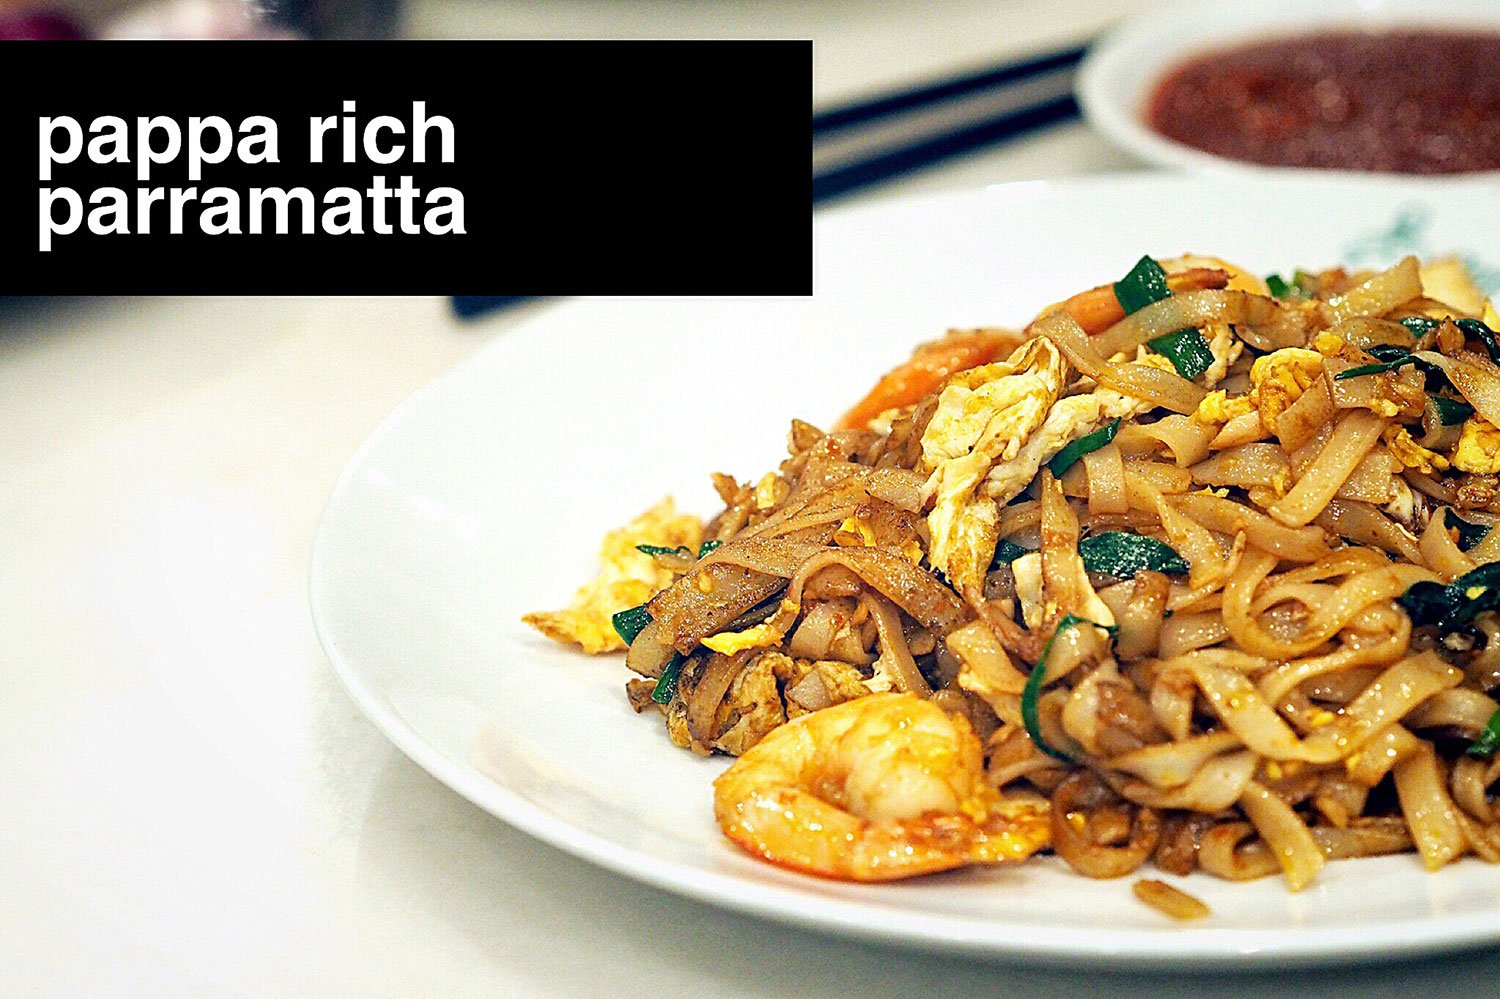 Sydney Food Blog Review of Pappa Rich, Parramatta